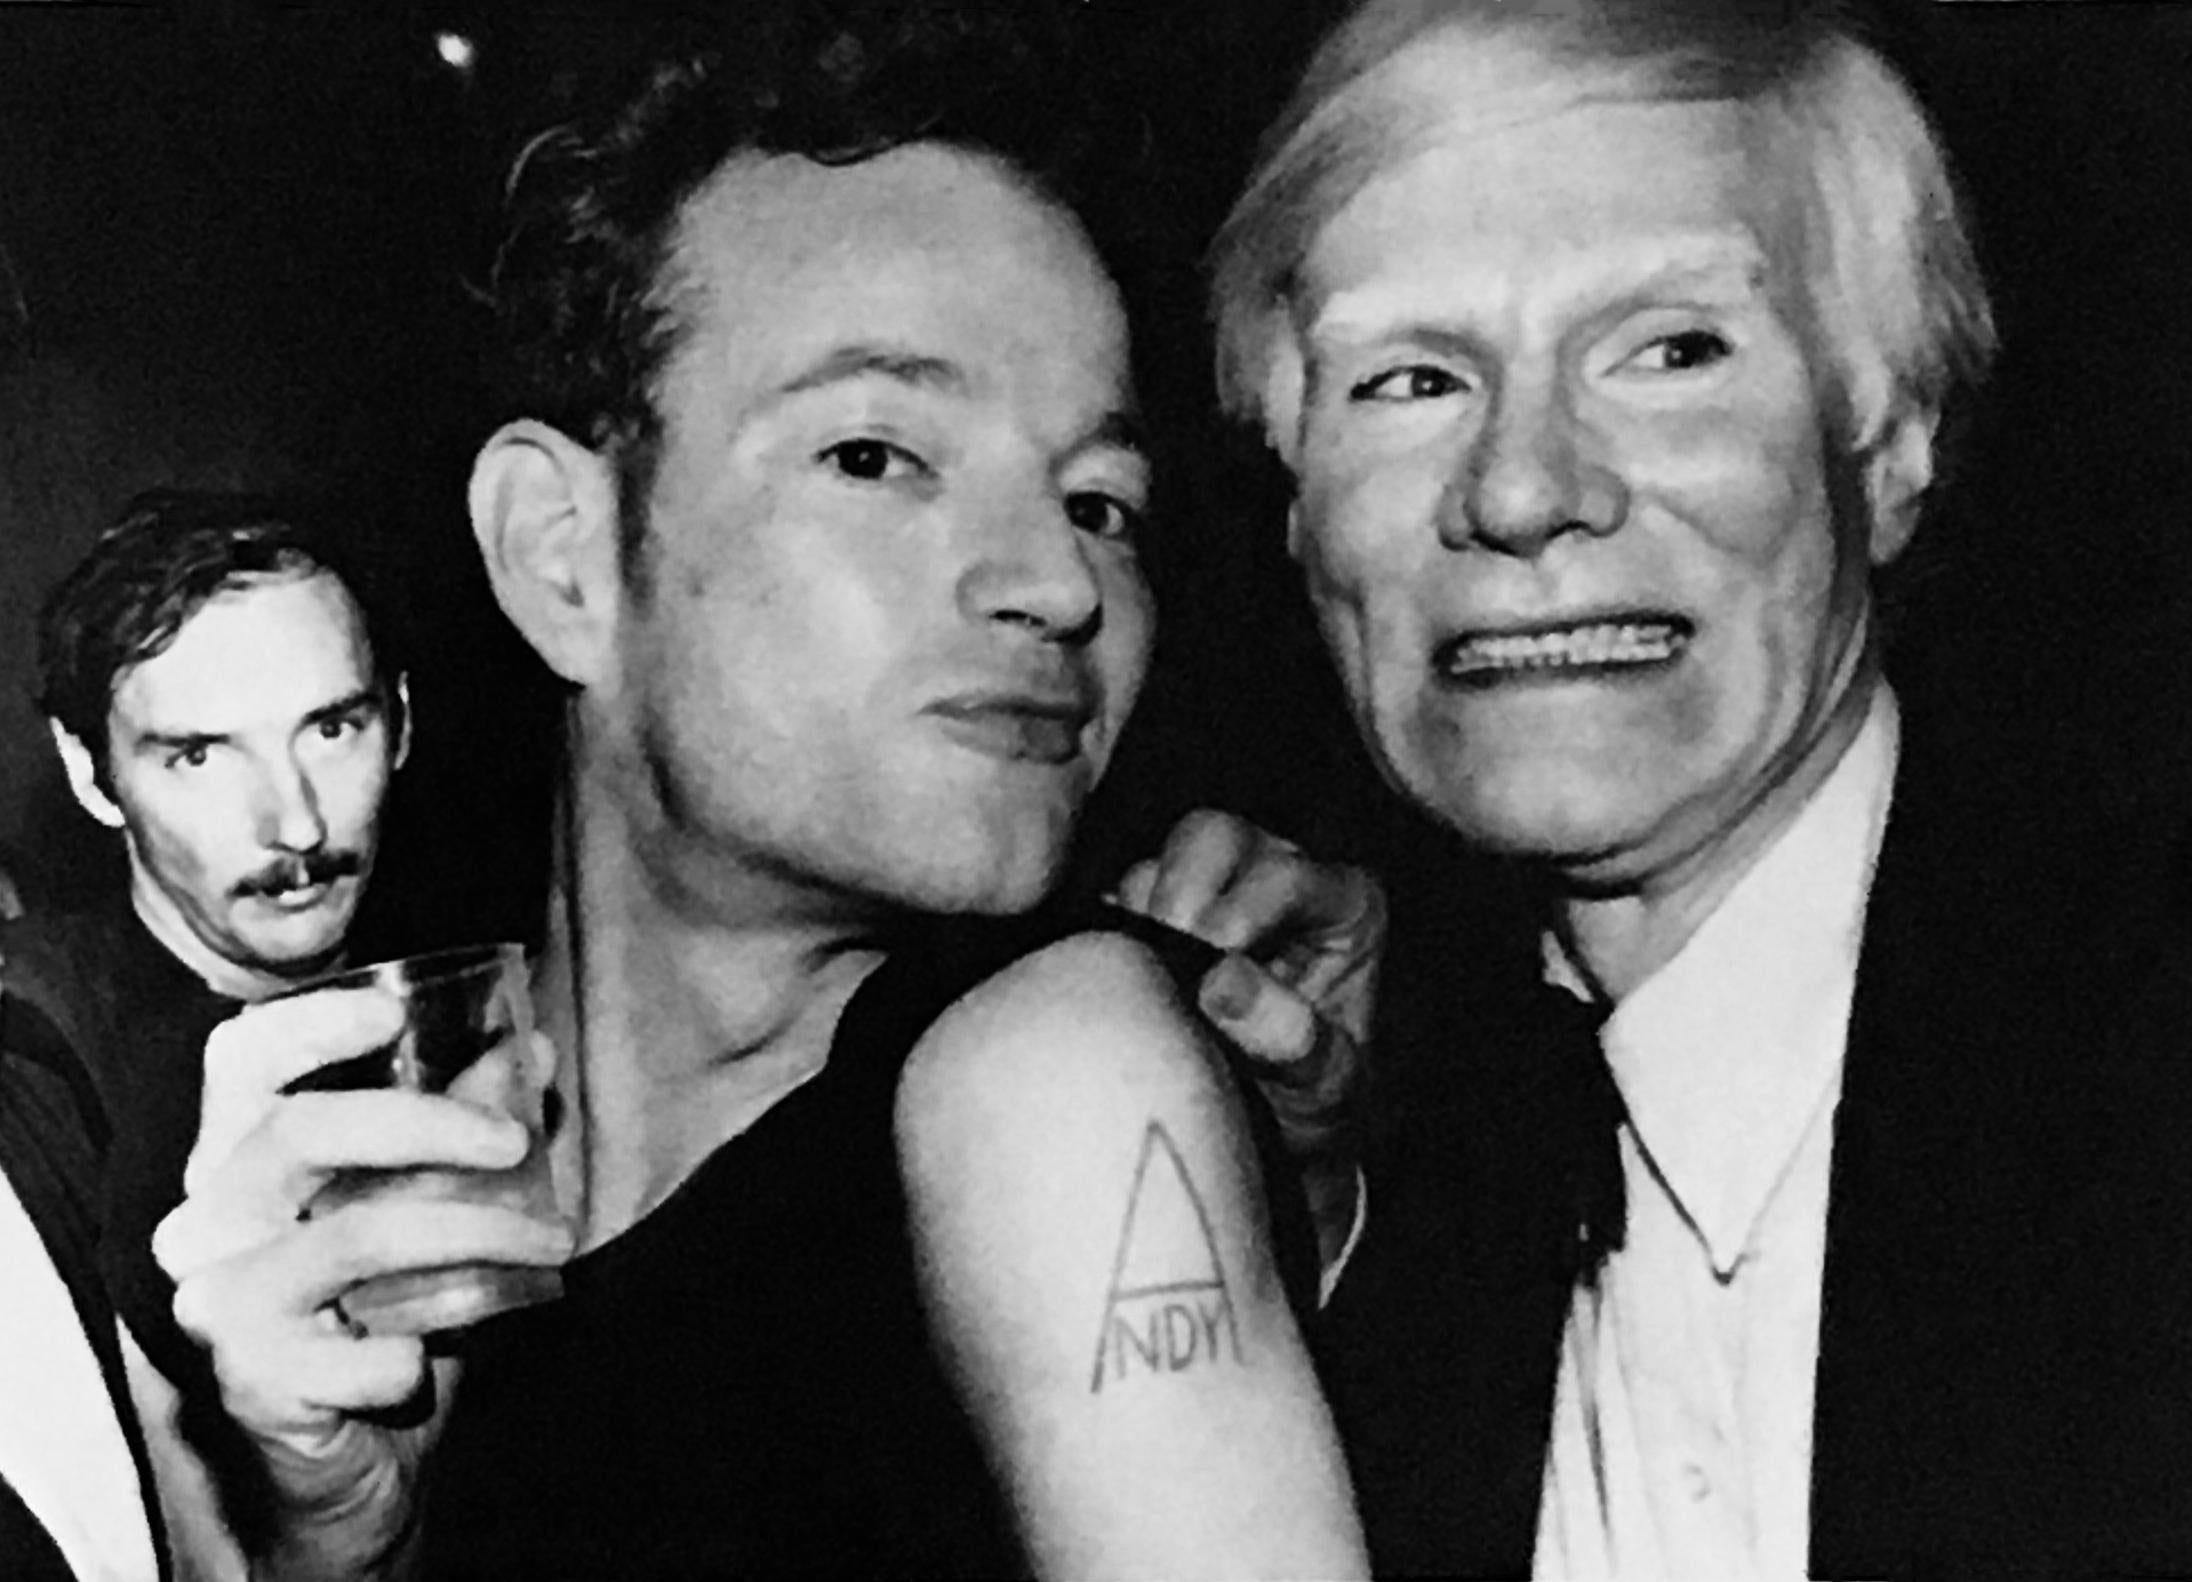 (after) Andy Warhol Portrait Photograph - Vintage Andy Warhol photograph c.1980